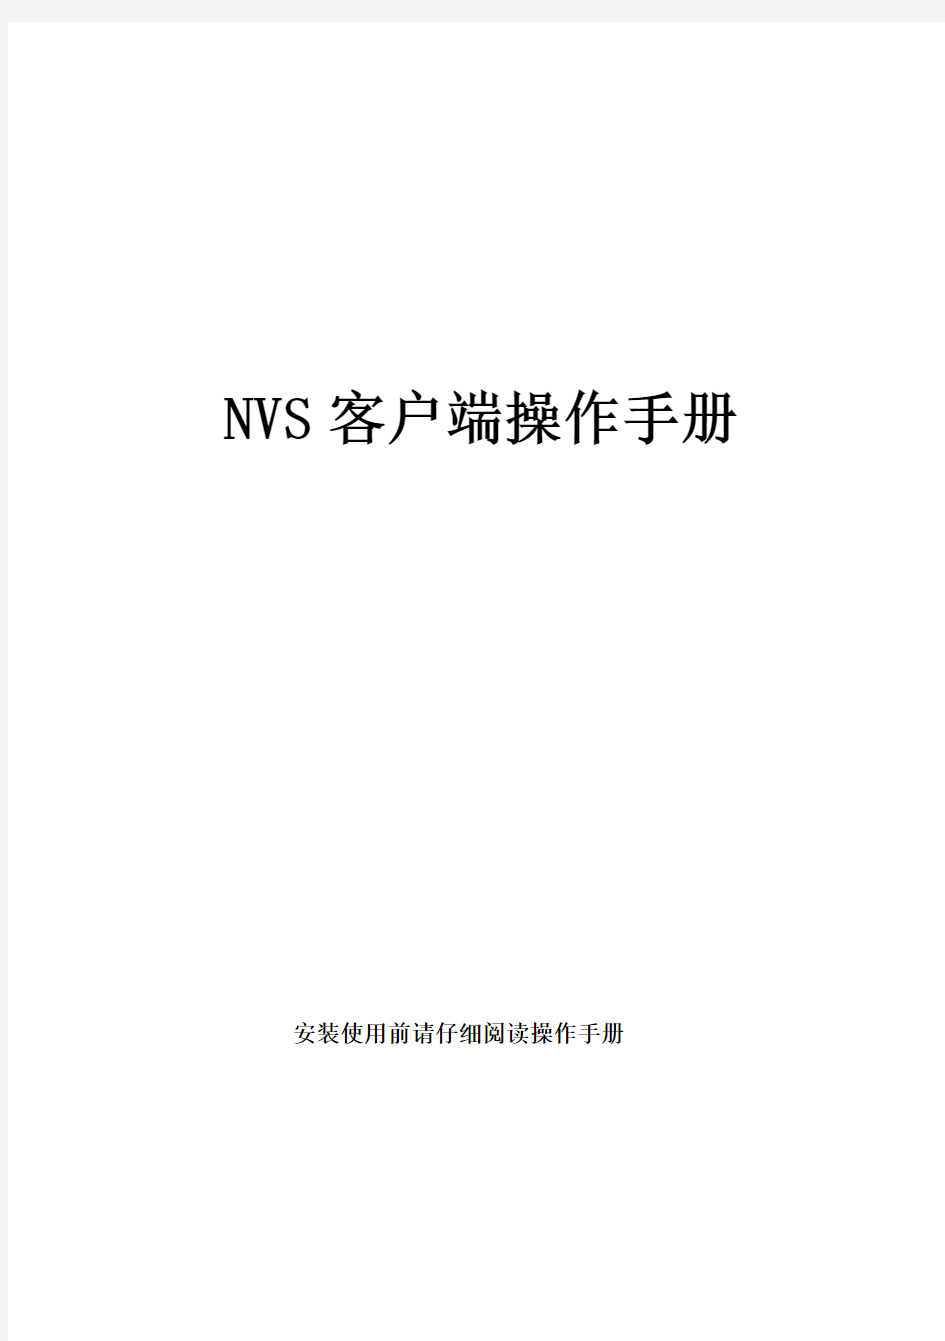 NVS客户端操作手册